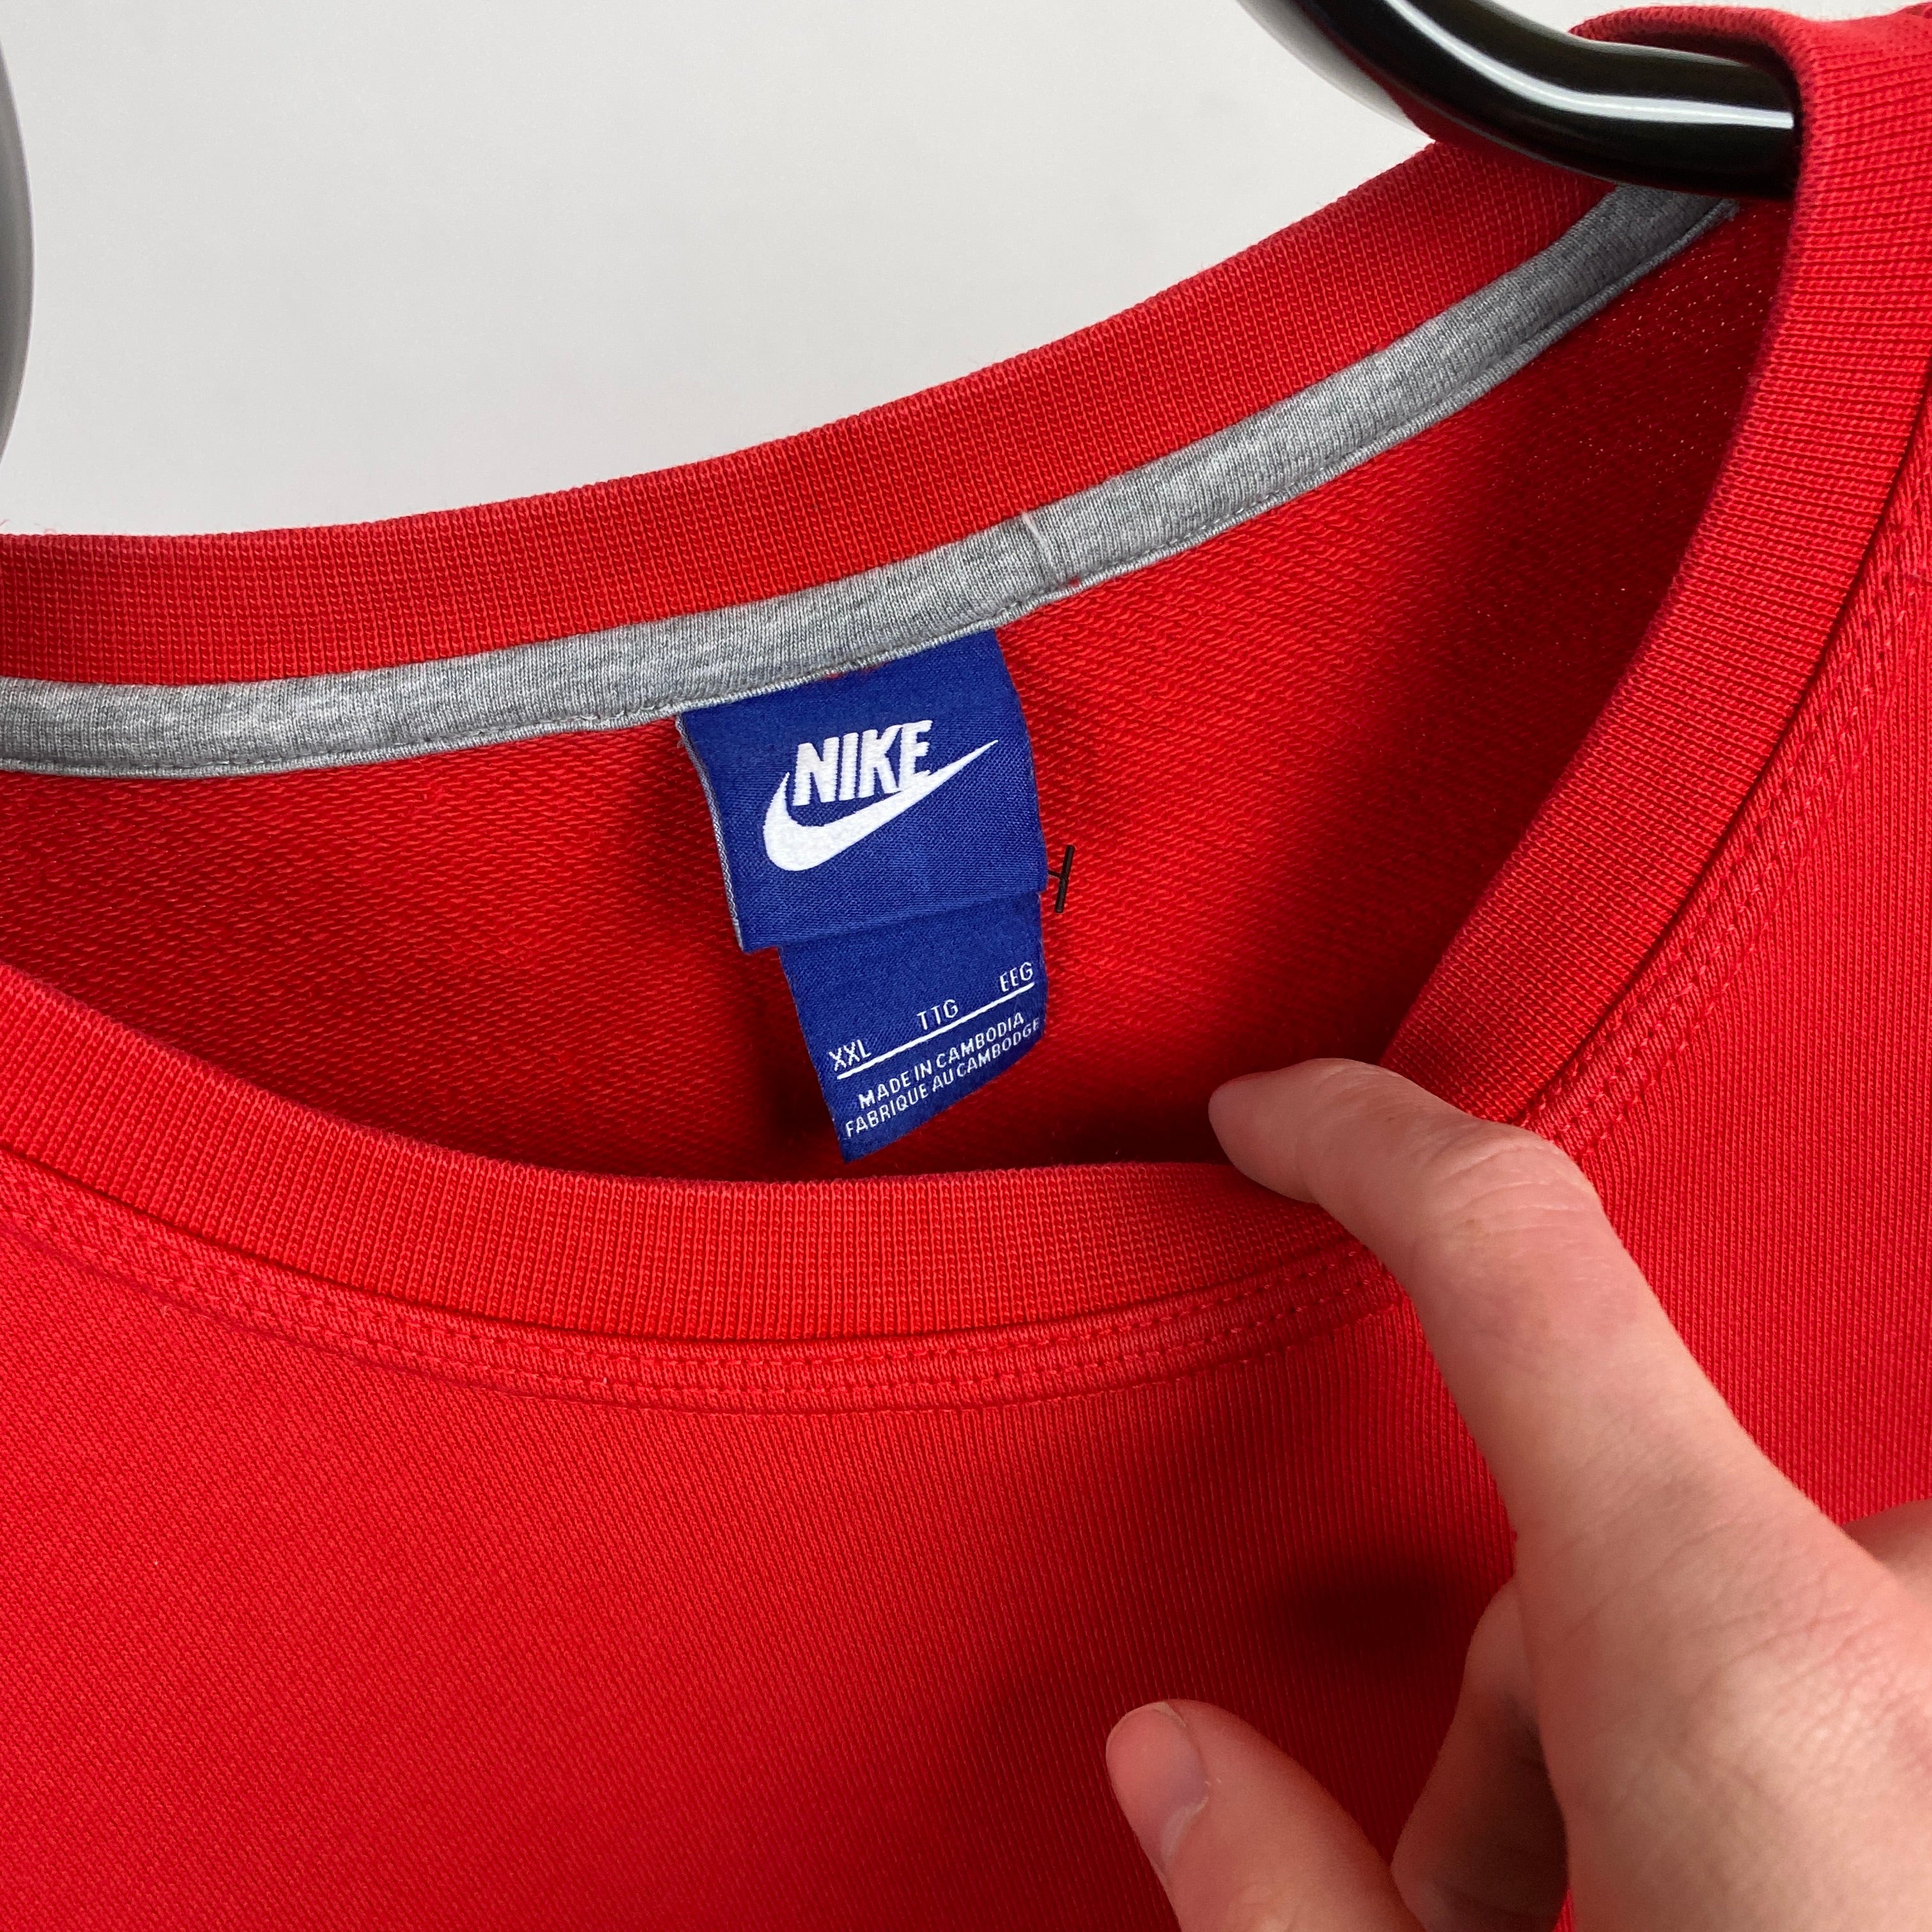 00s Nike Sweatshirt Red XXL